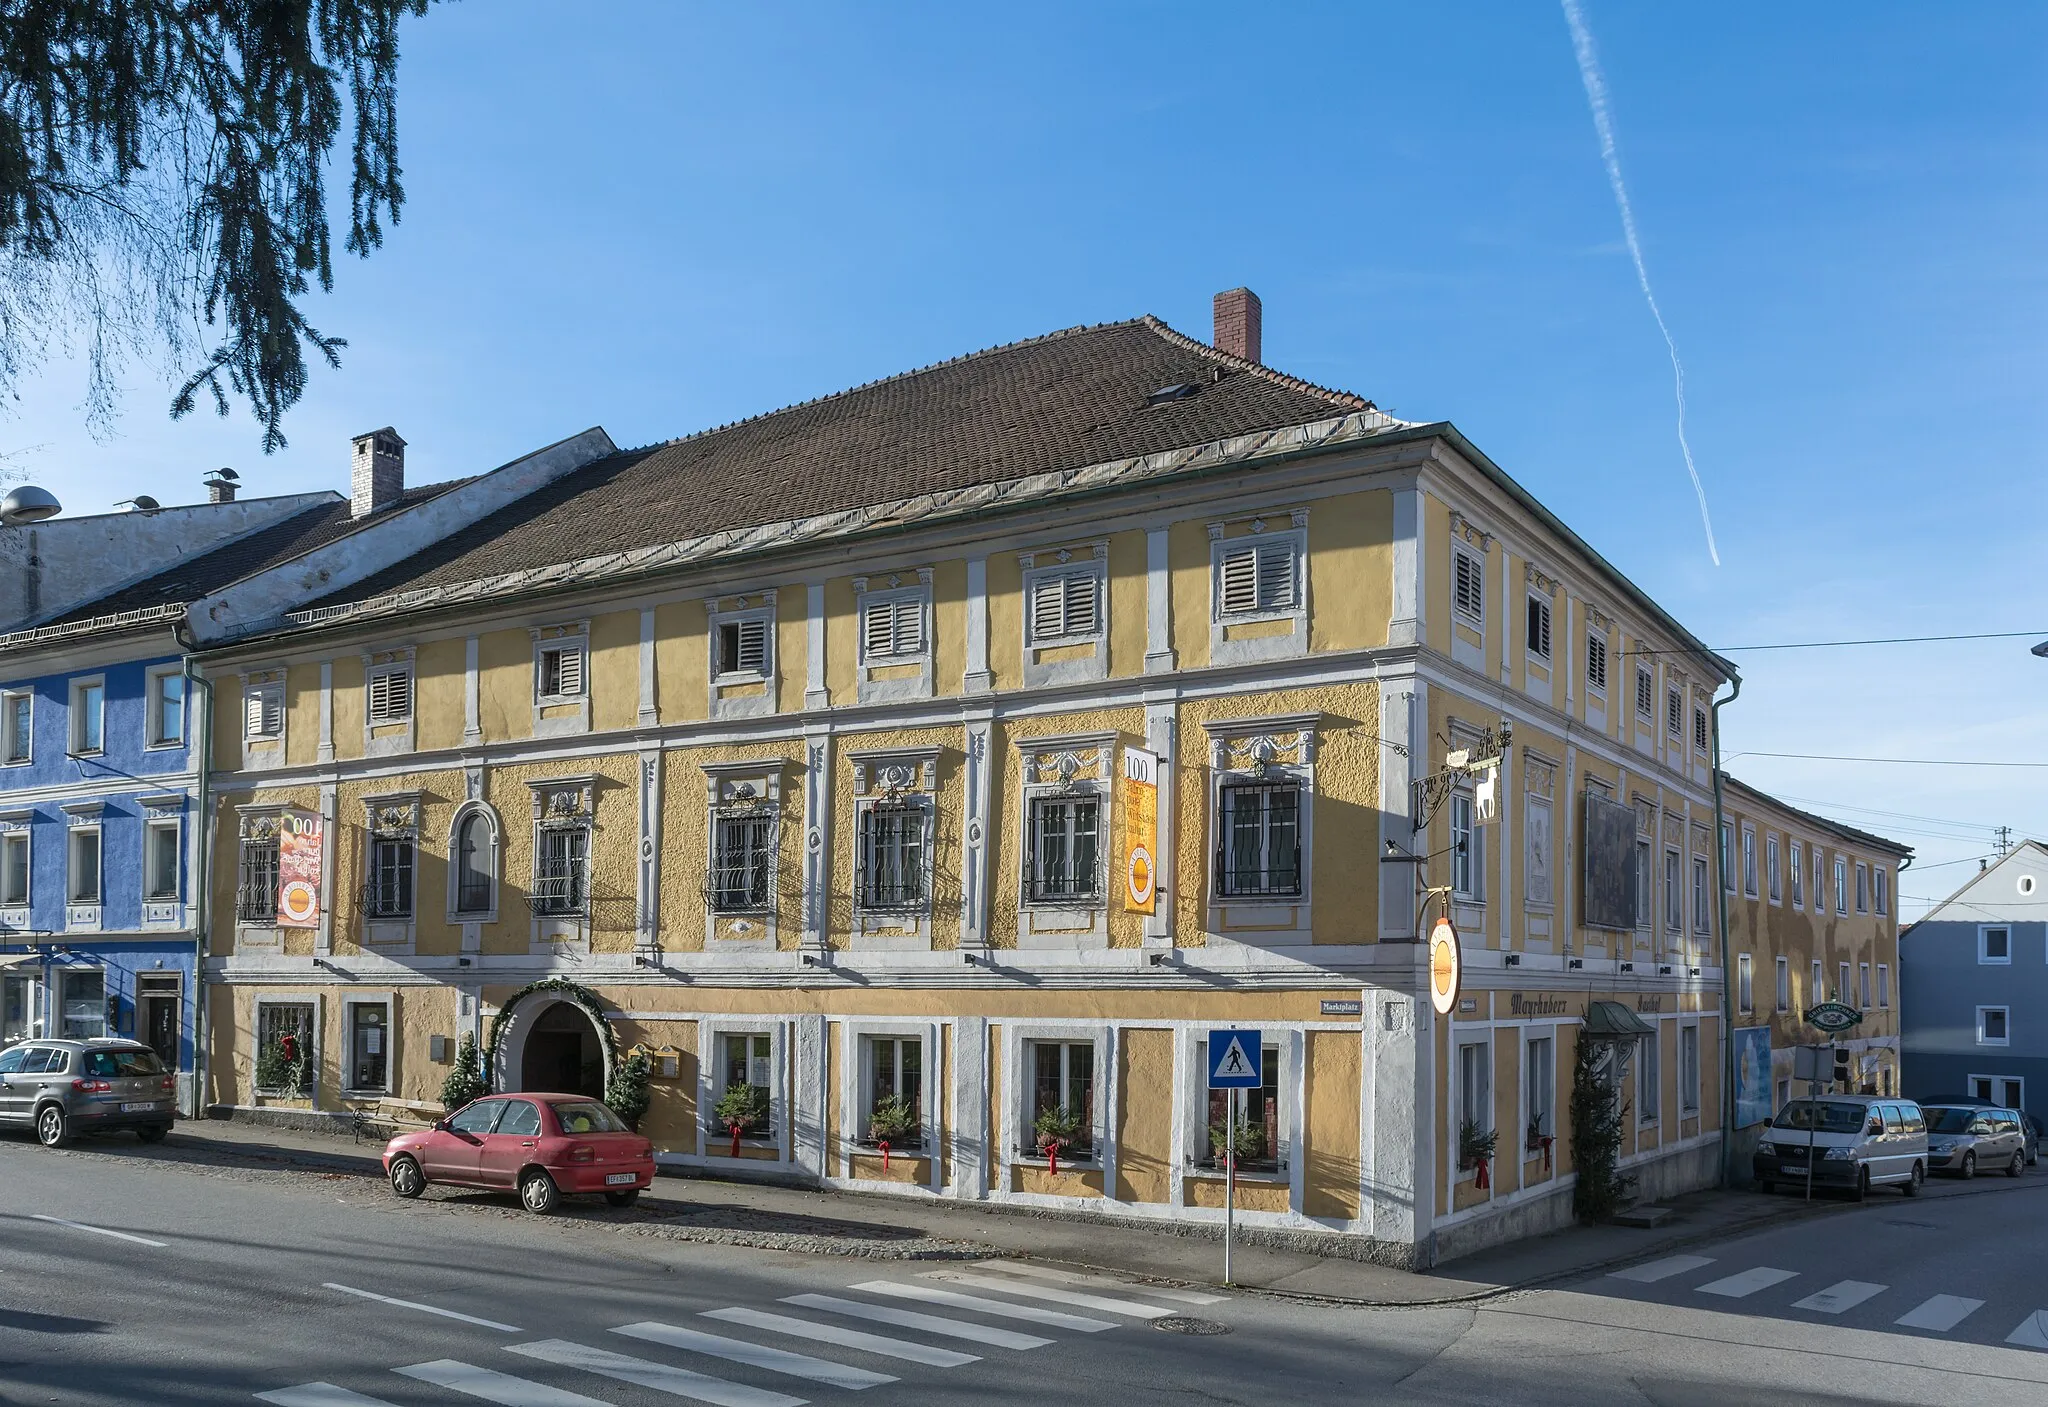 Photo showing: The inn "Zum Weißen Lamm" in Waizenkirchen (Upper Austria) was erected in 1587 as a brewery. Since 1656 it was also an Inn. The original building was destroyed by fire in 1704. The composer Wilhelm Kienzl was born here in 1857.